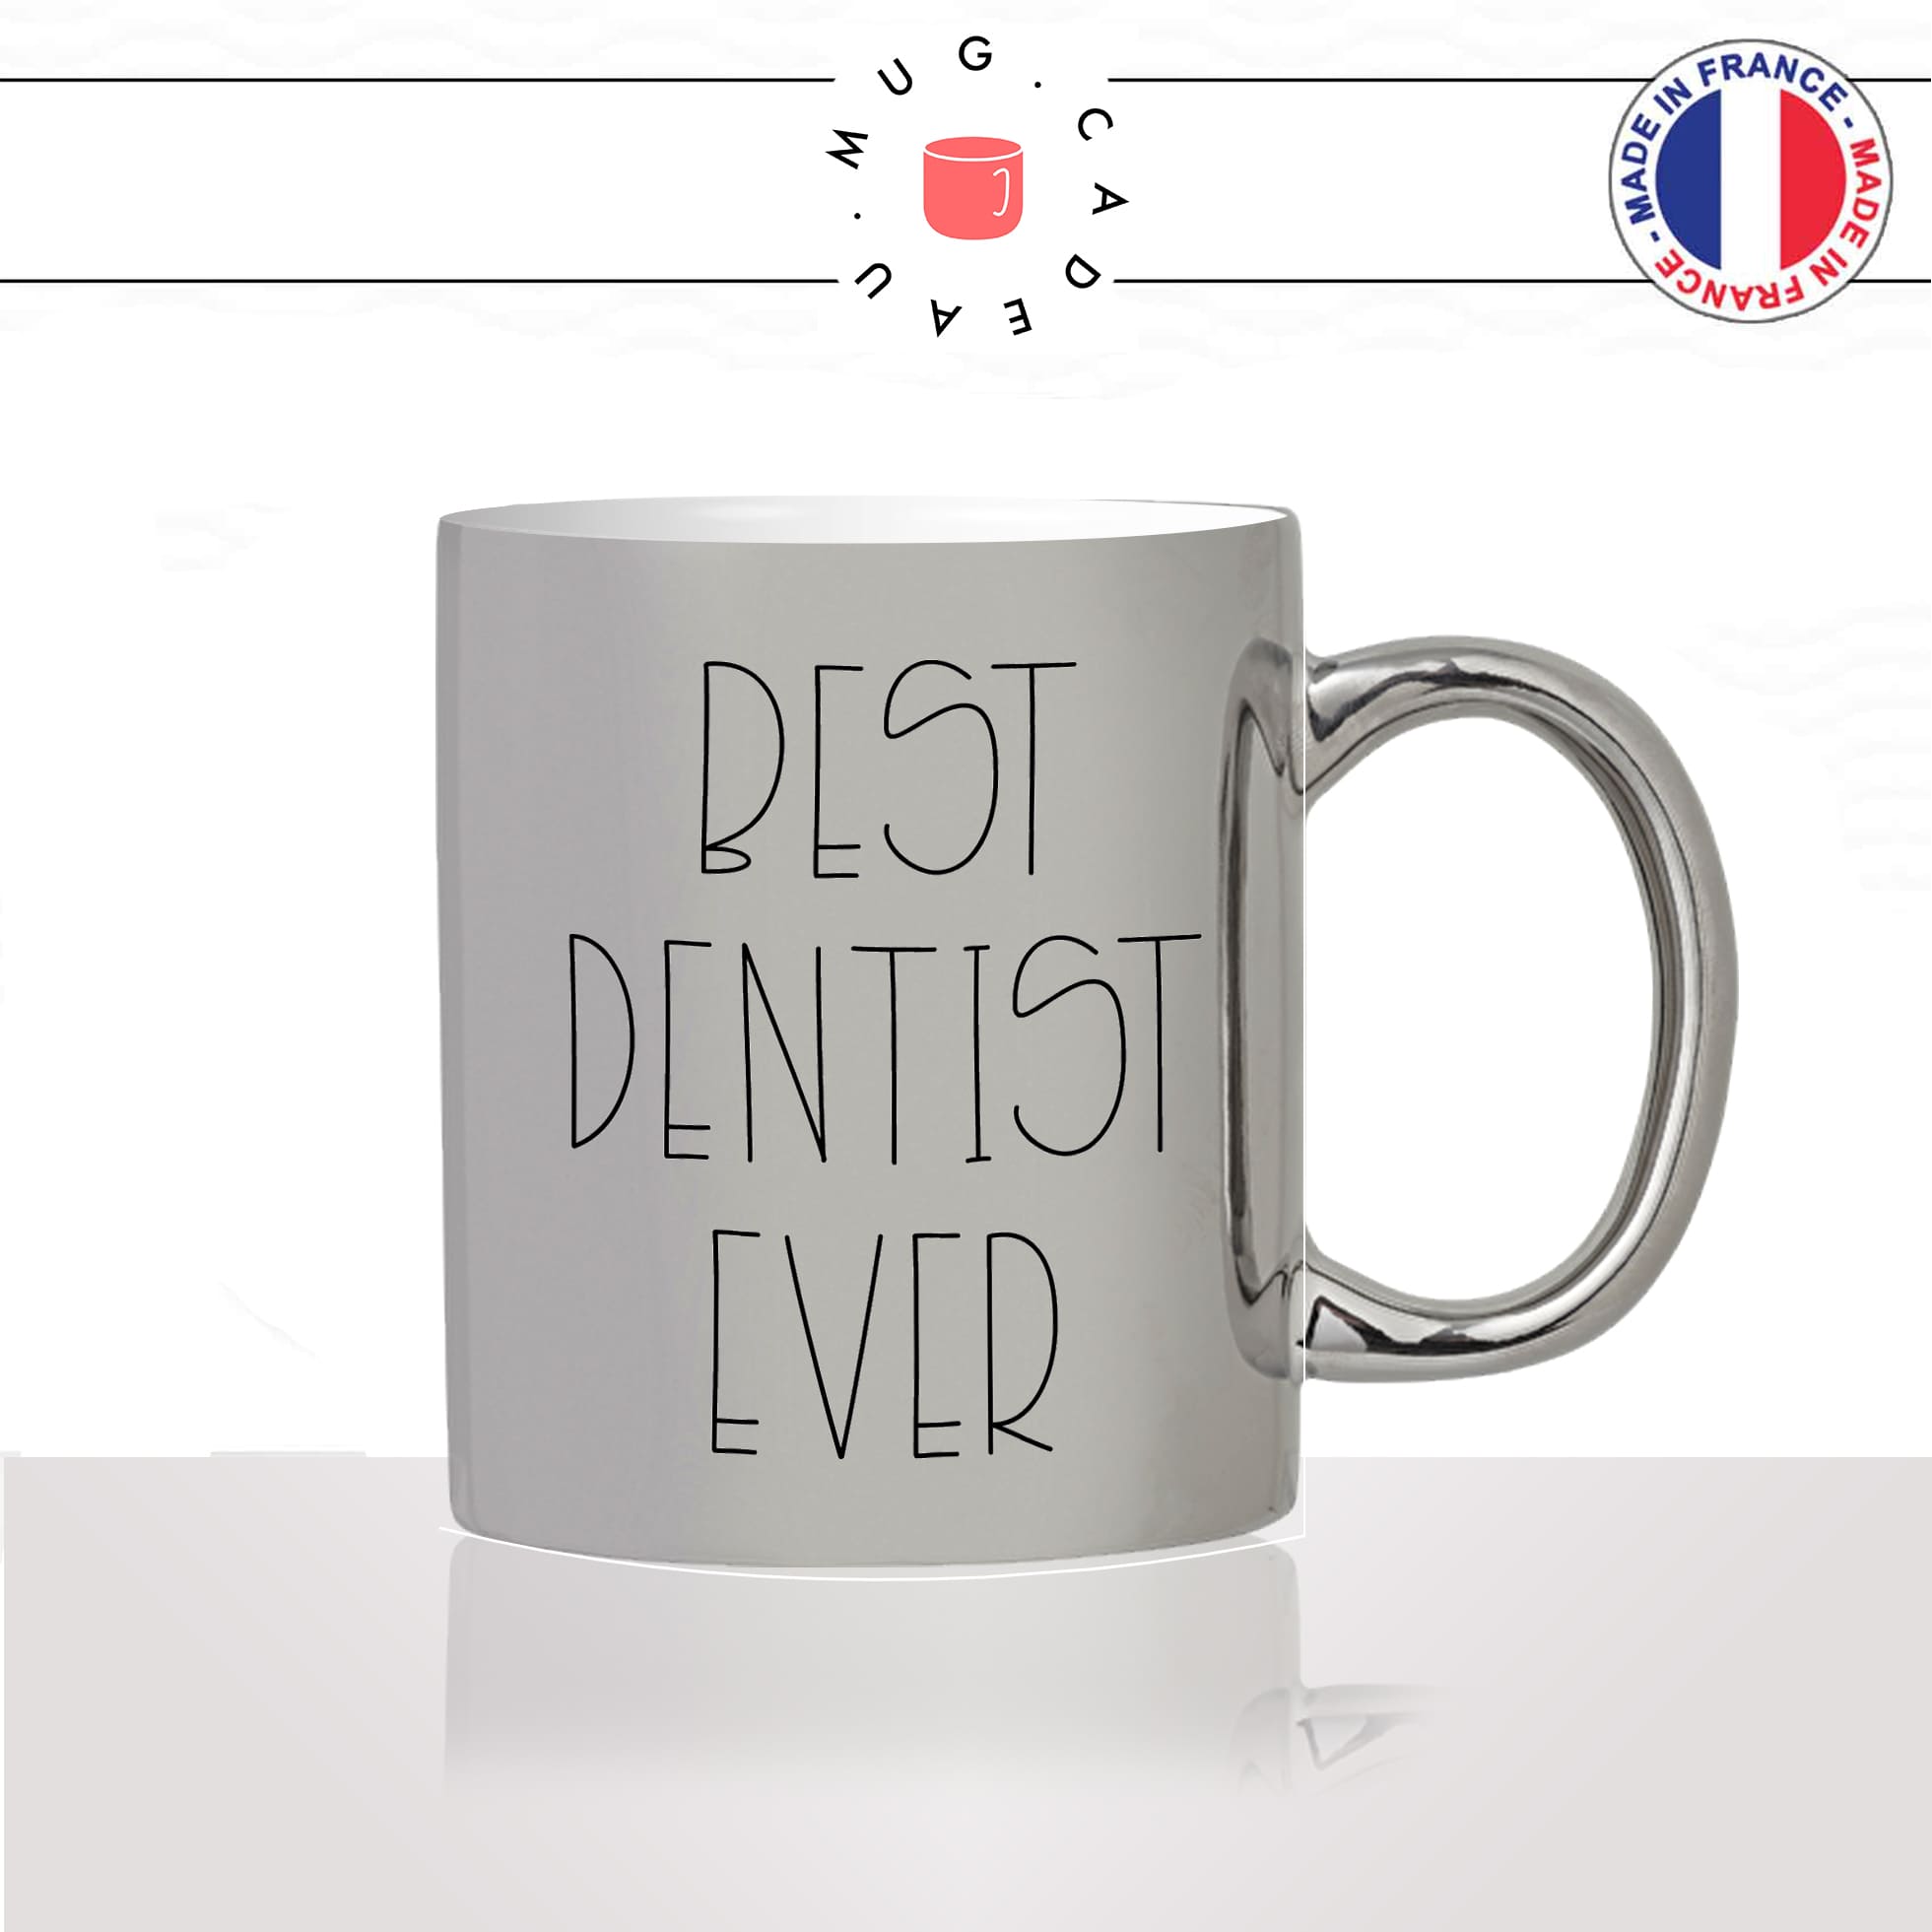 mug-tasse-argenté-silver-meilleur-dentiste-best-dentist-ever-travail-medecin-dent-humour-métier-fun-café-thé-idée-cadeau-original2